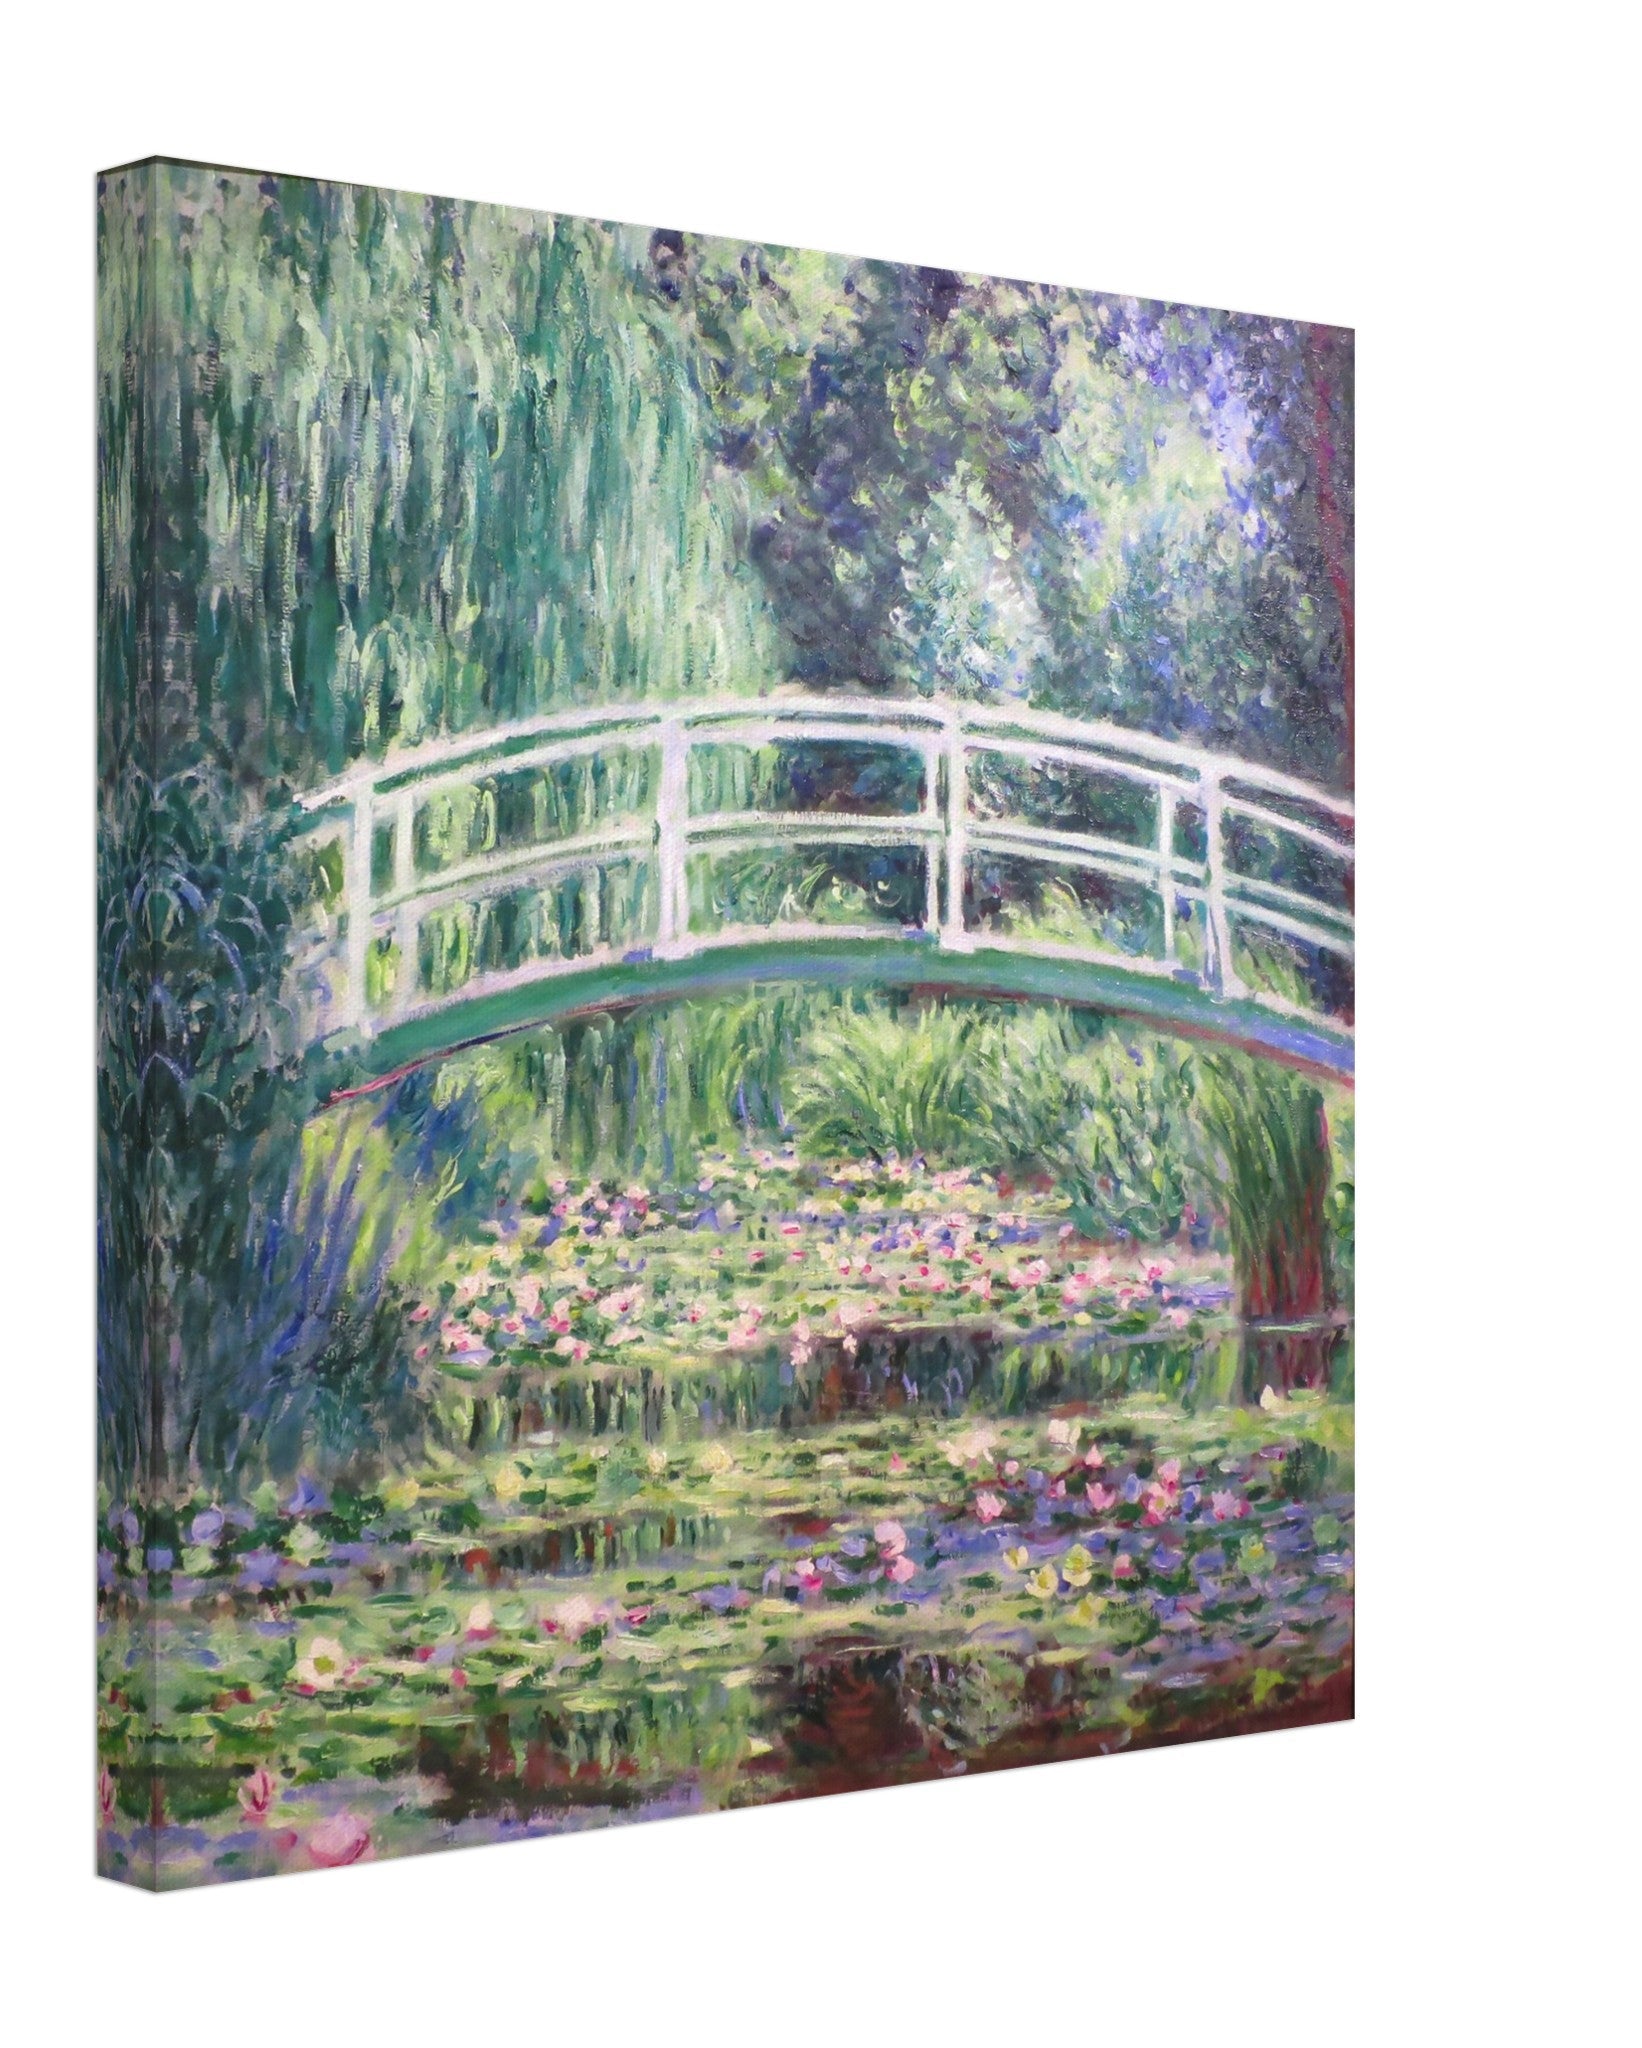 Water Lily Pond Canvas Print, Japanese Bridge Over A Pond Of Water Lilies - Water Lily Pond Print - Claude Monet - WallArtPrints4U